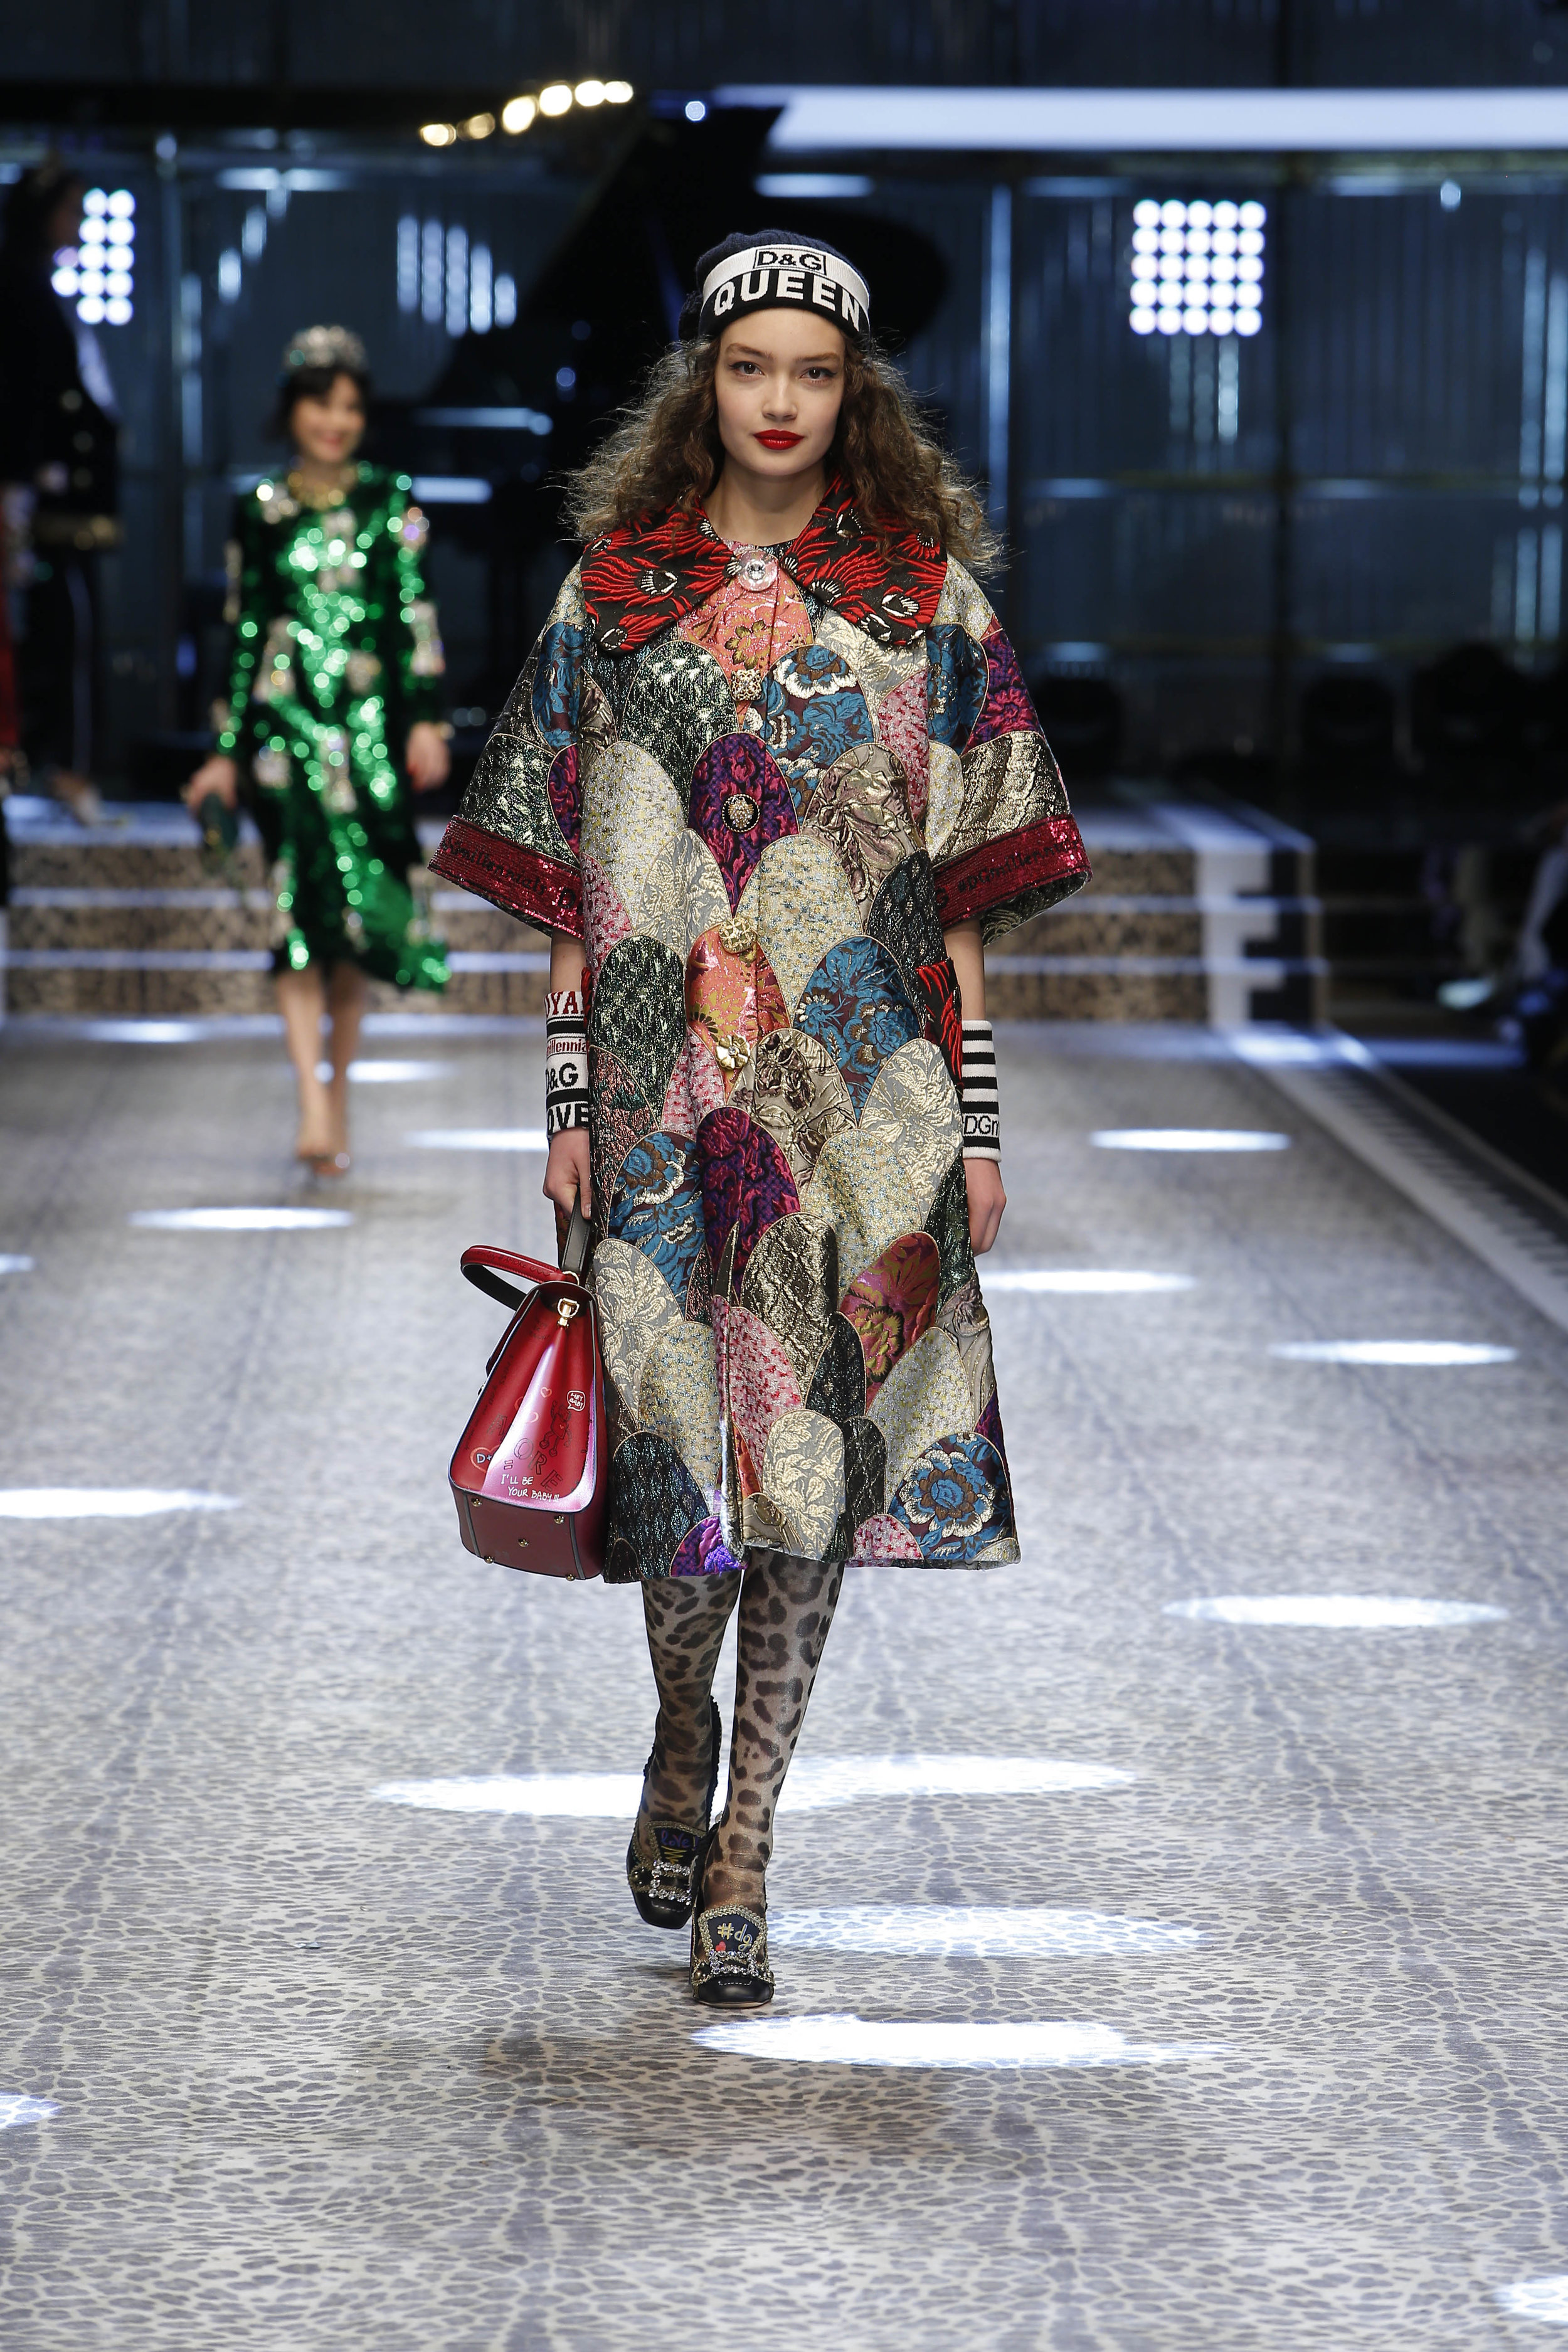 Dolce&Gabbana_women's fashion show fw17-18_Runway_images (12).jpg